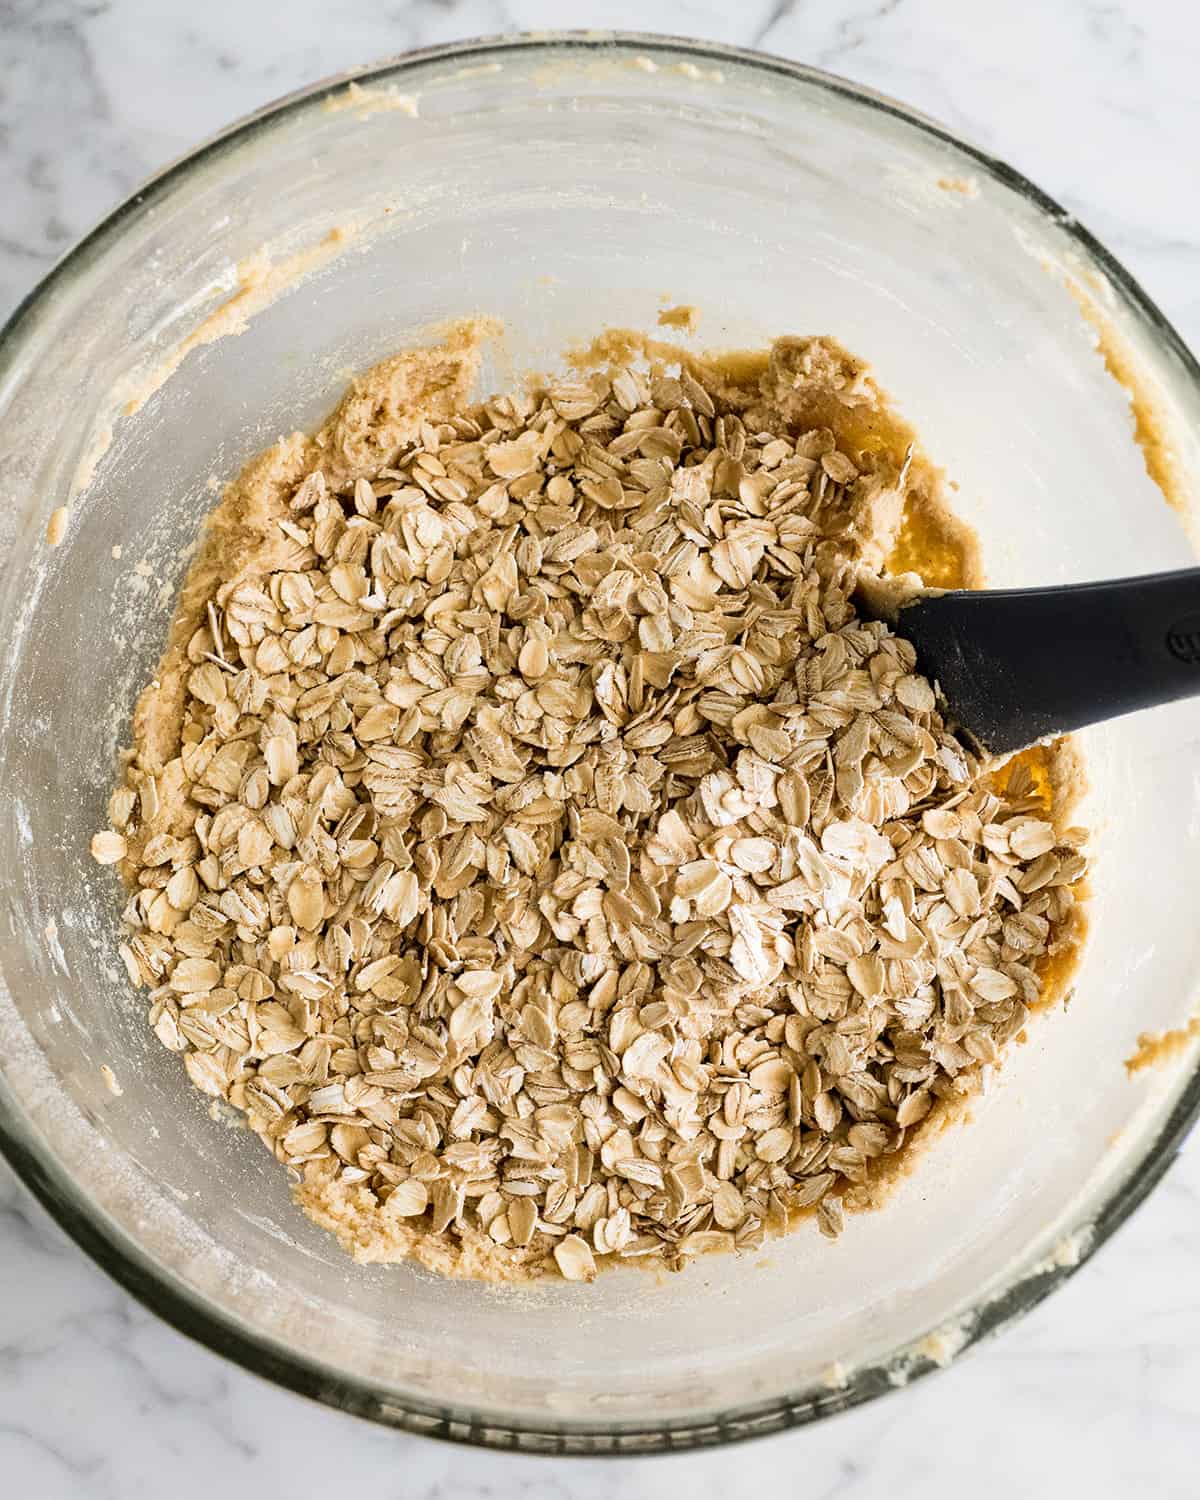 How to Make Oatmeal Cookies - adding oatmeal